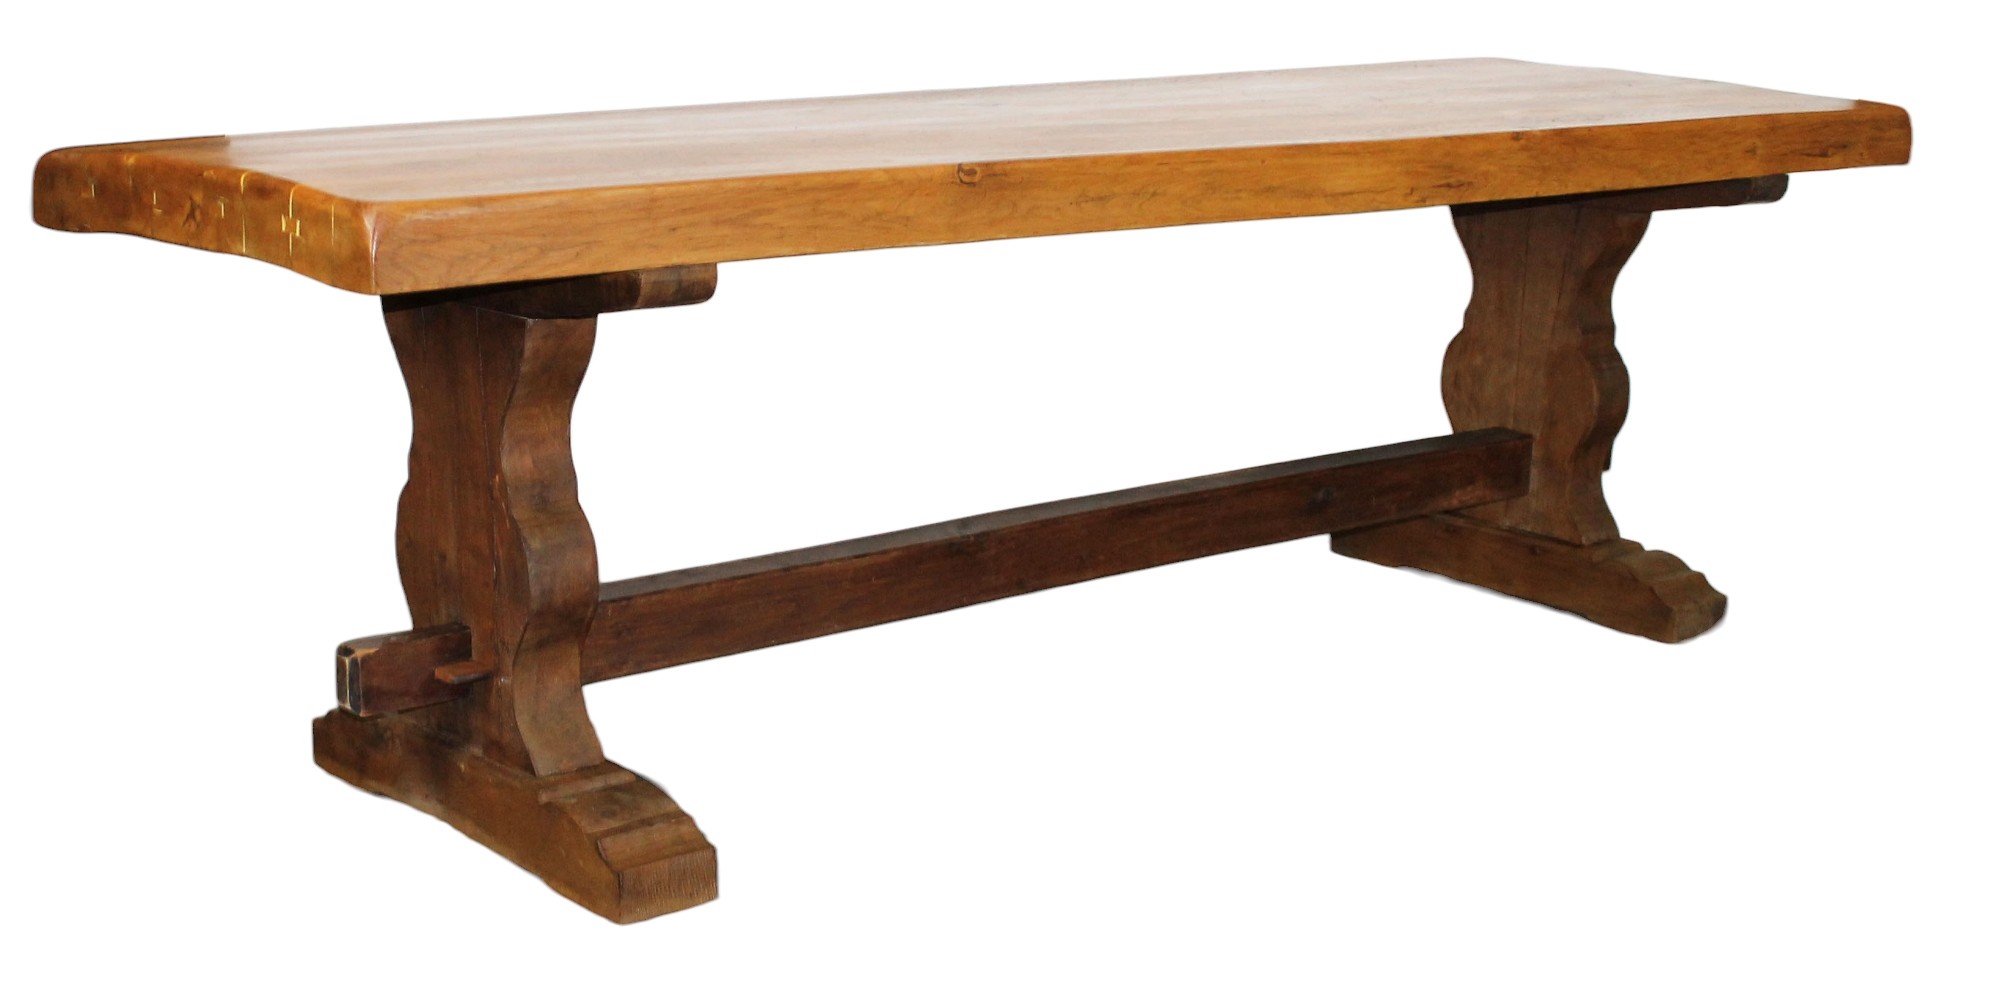 French oak trestle table, 100"l